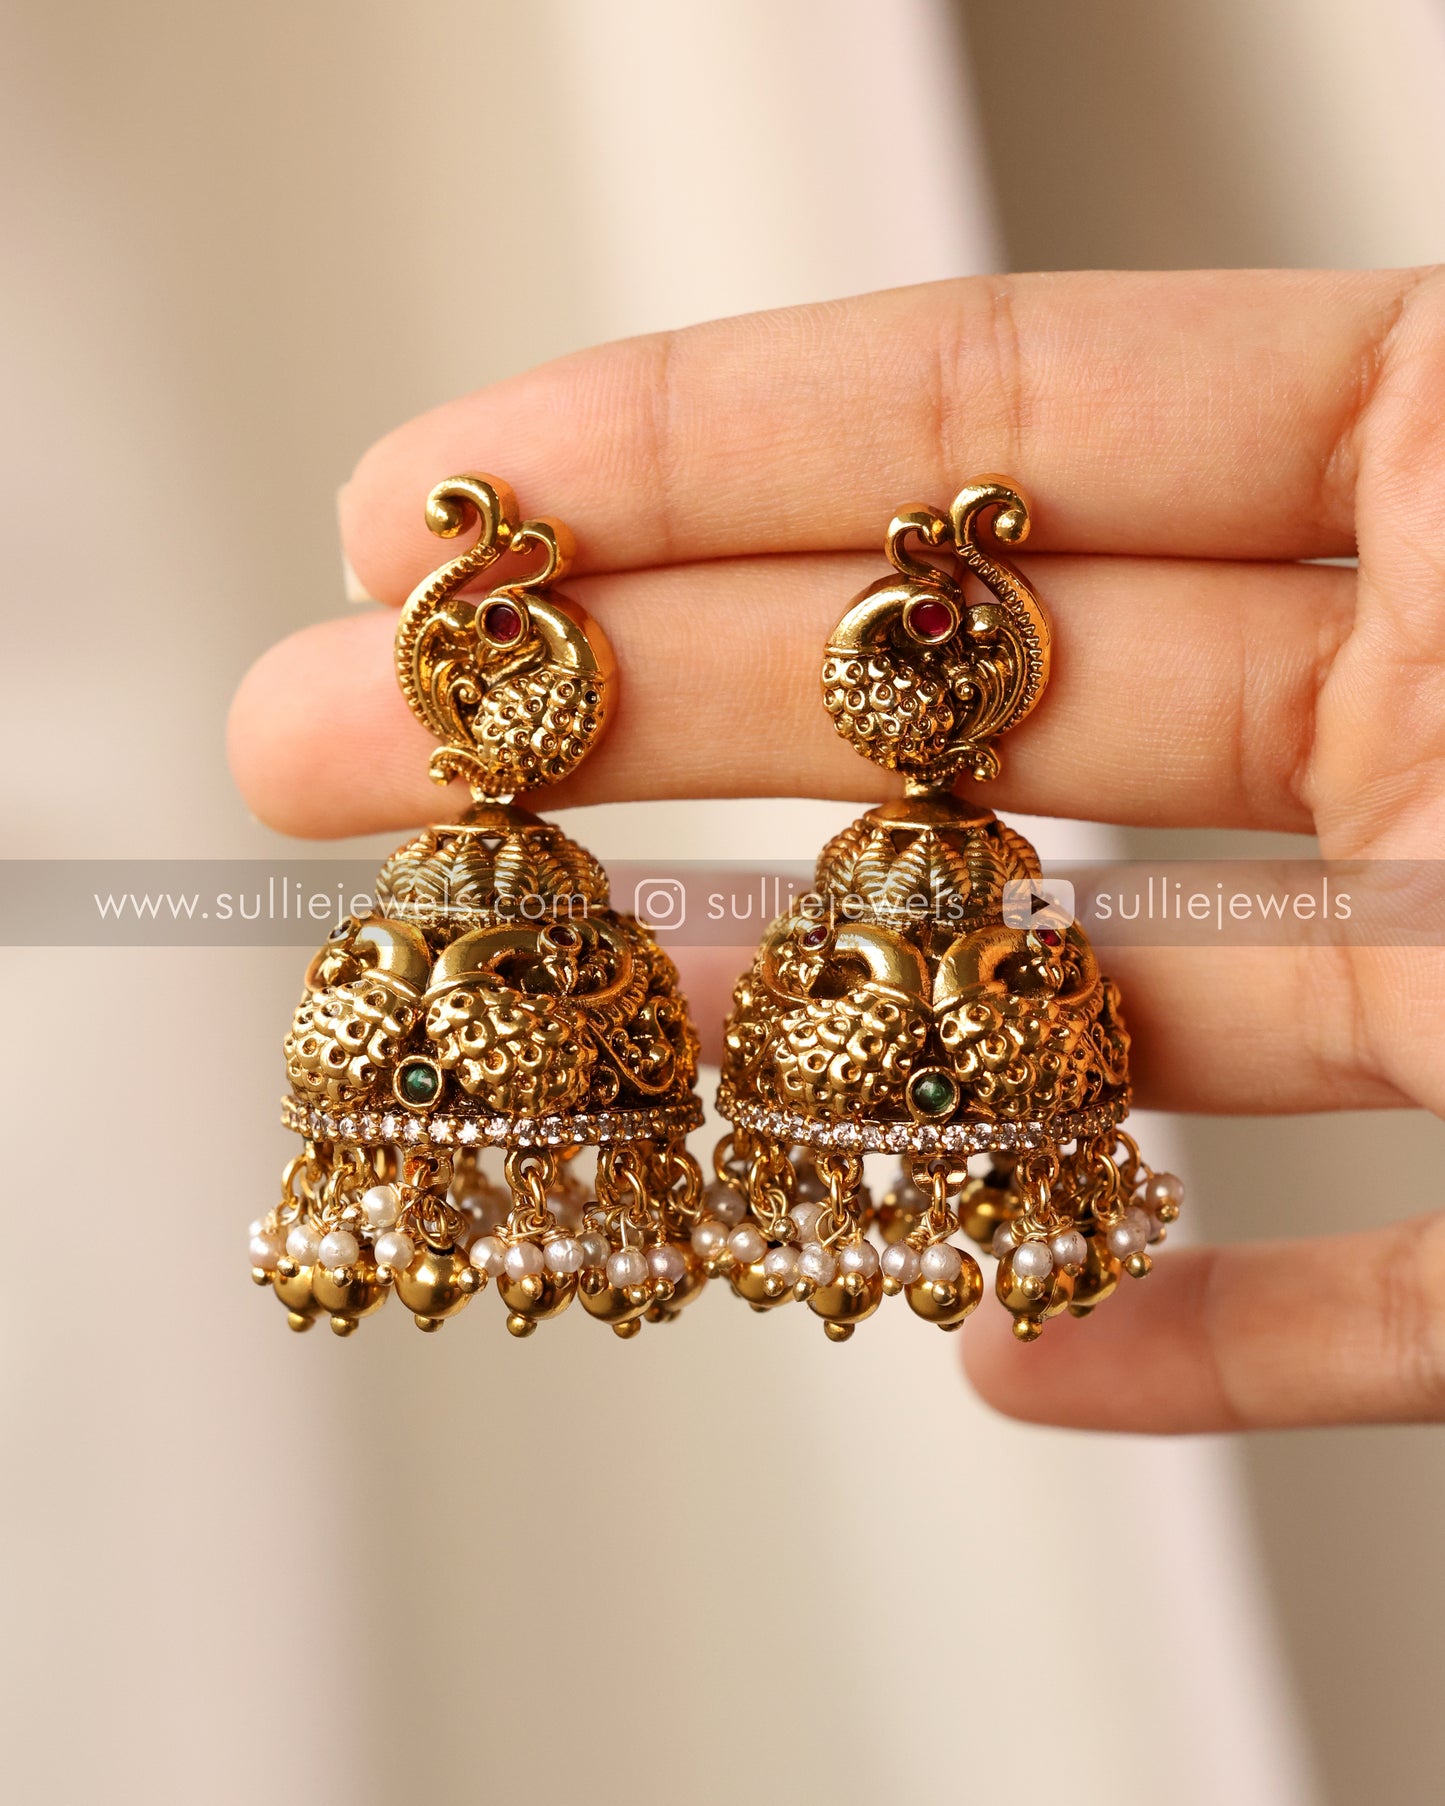 Premium Antique Lakshmi Haram with Earrings